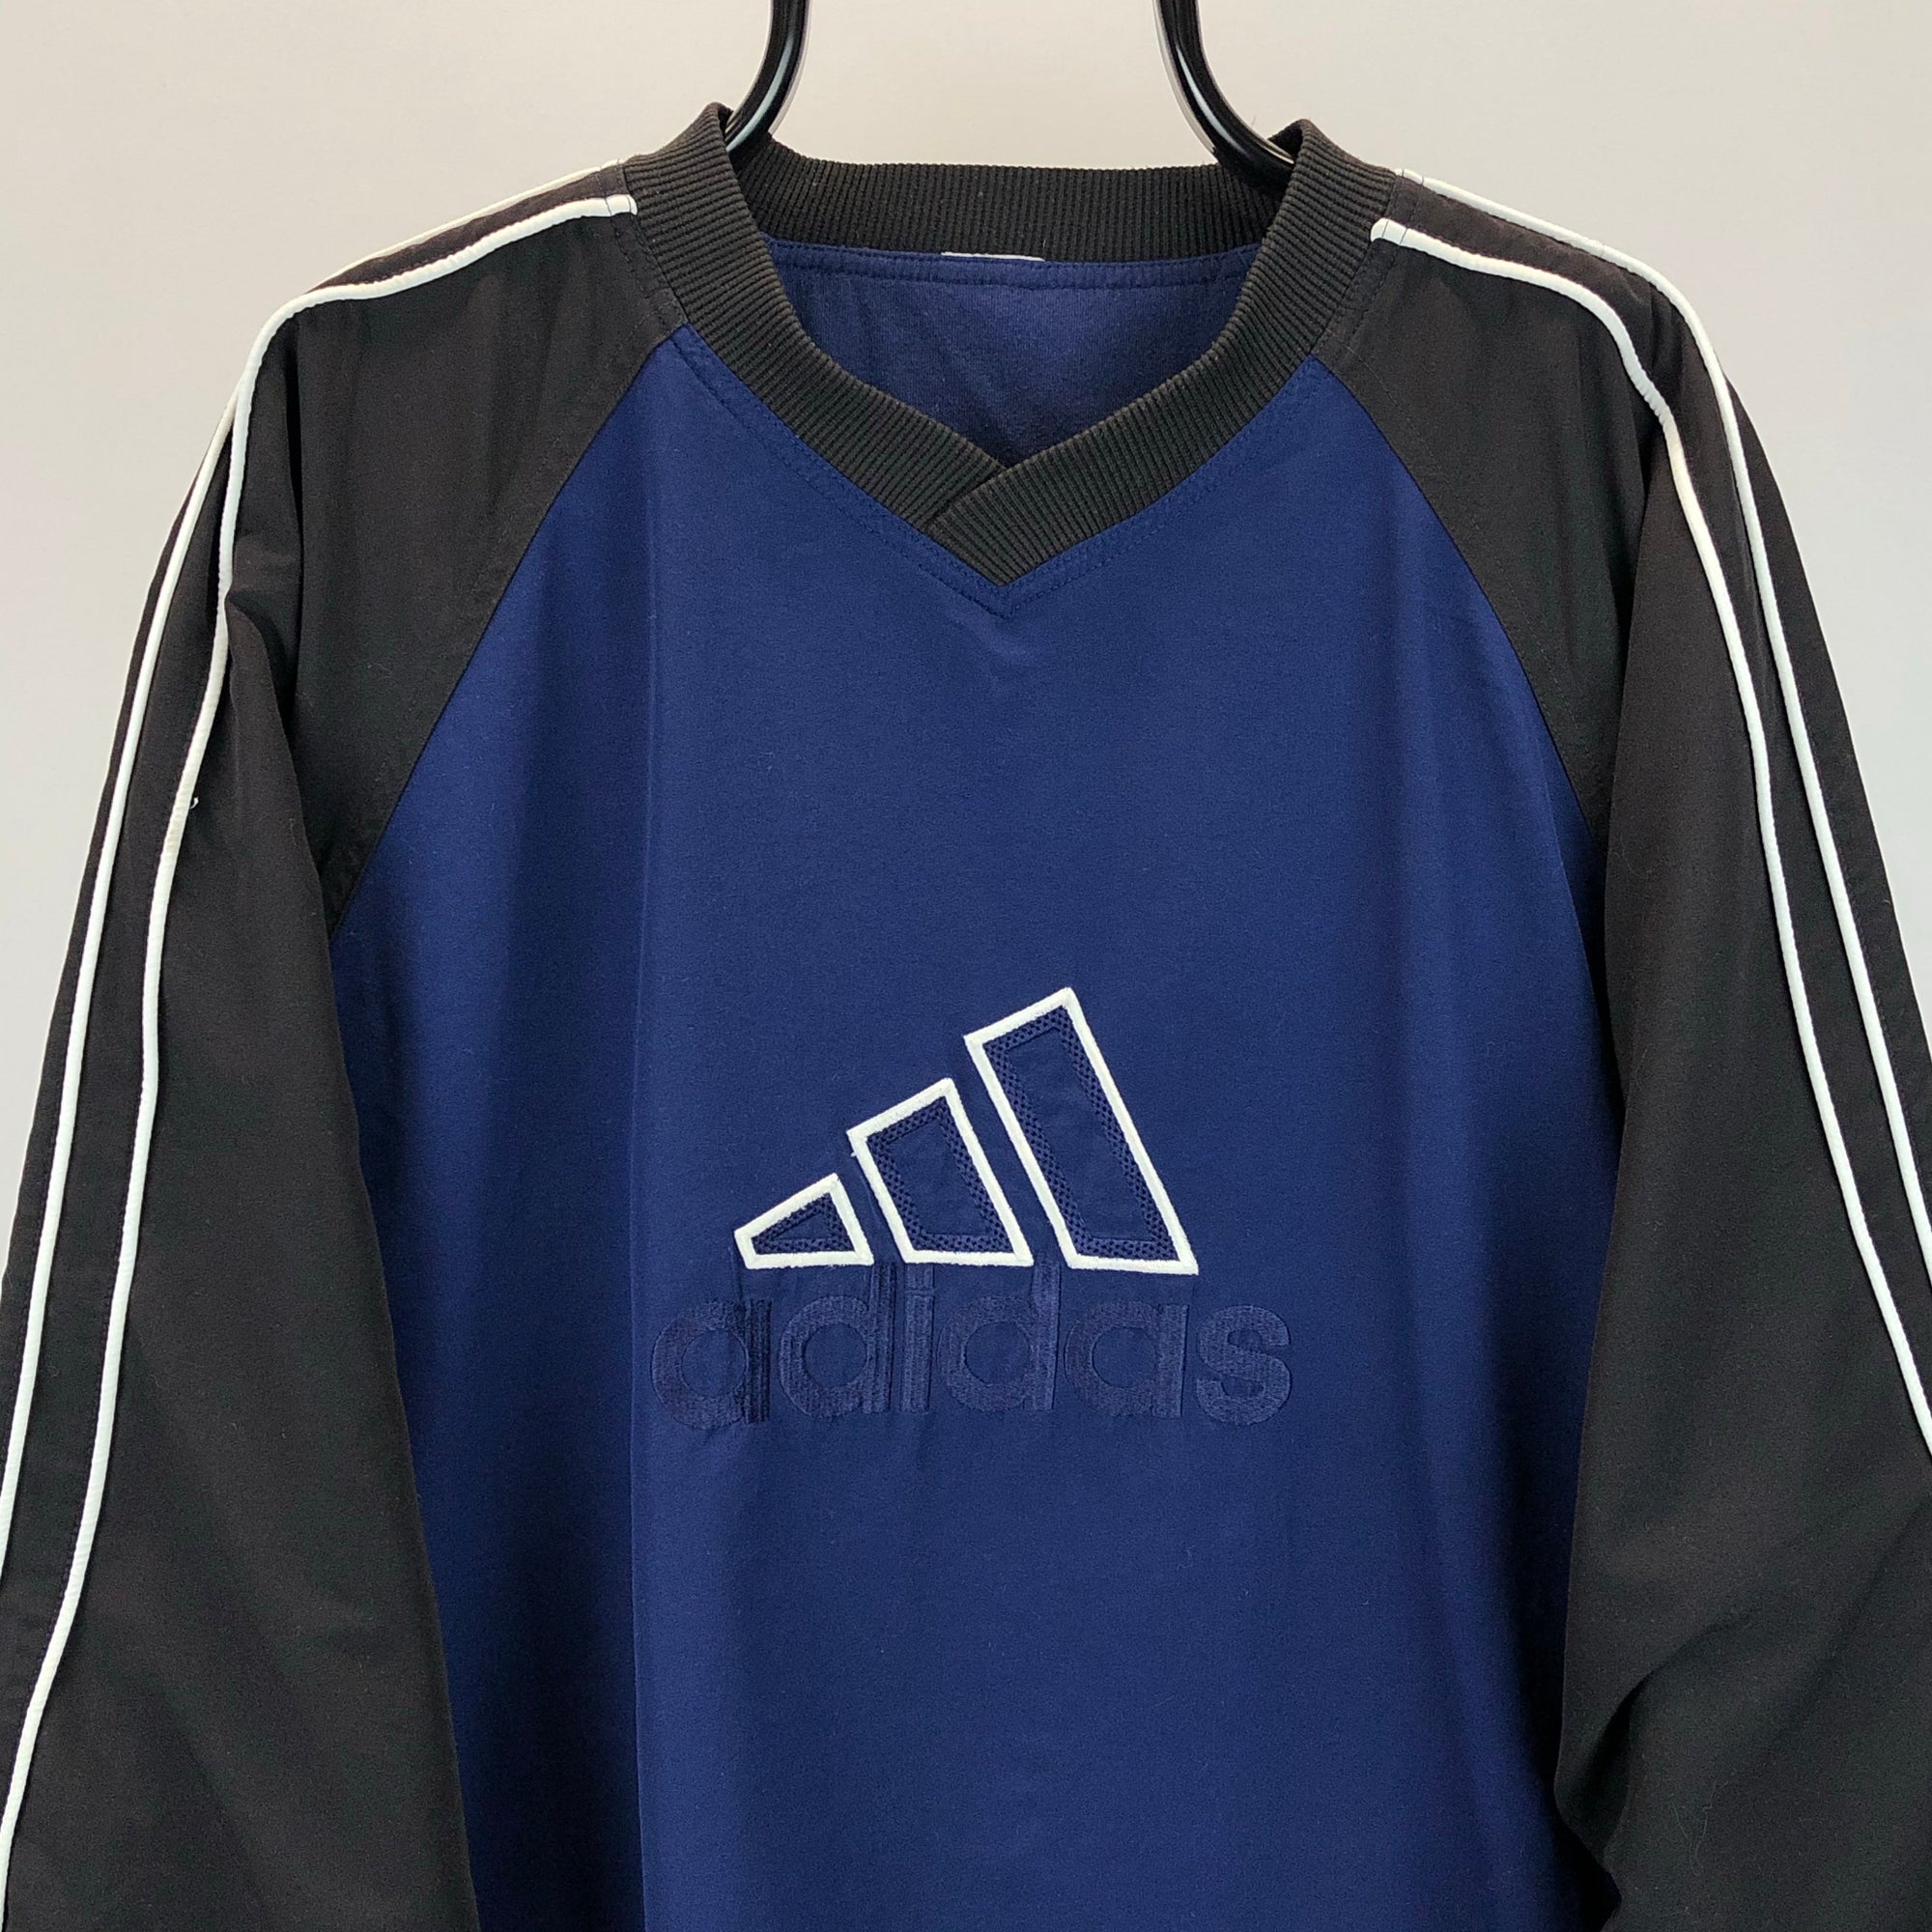 Vintage 90s Adidas Lined Nylon Sweatshirt in Navy & Blue - Men’s Large/Women’s XL